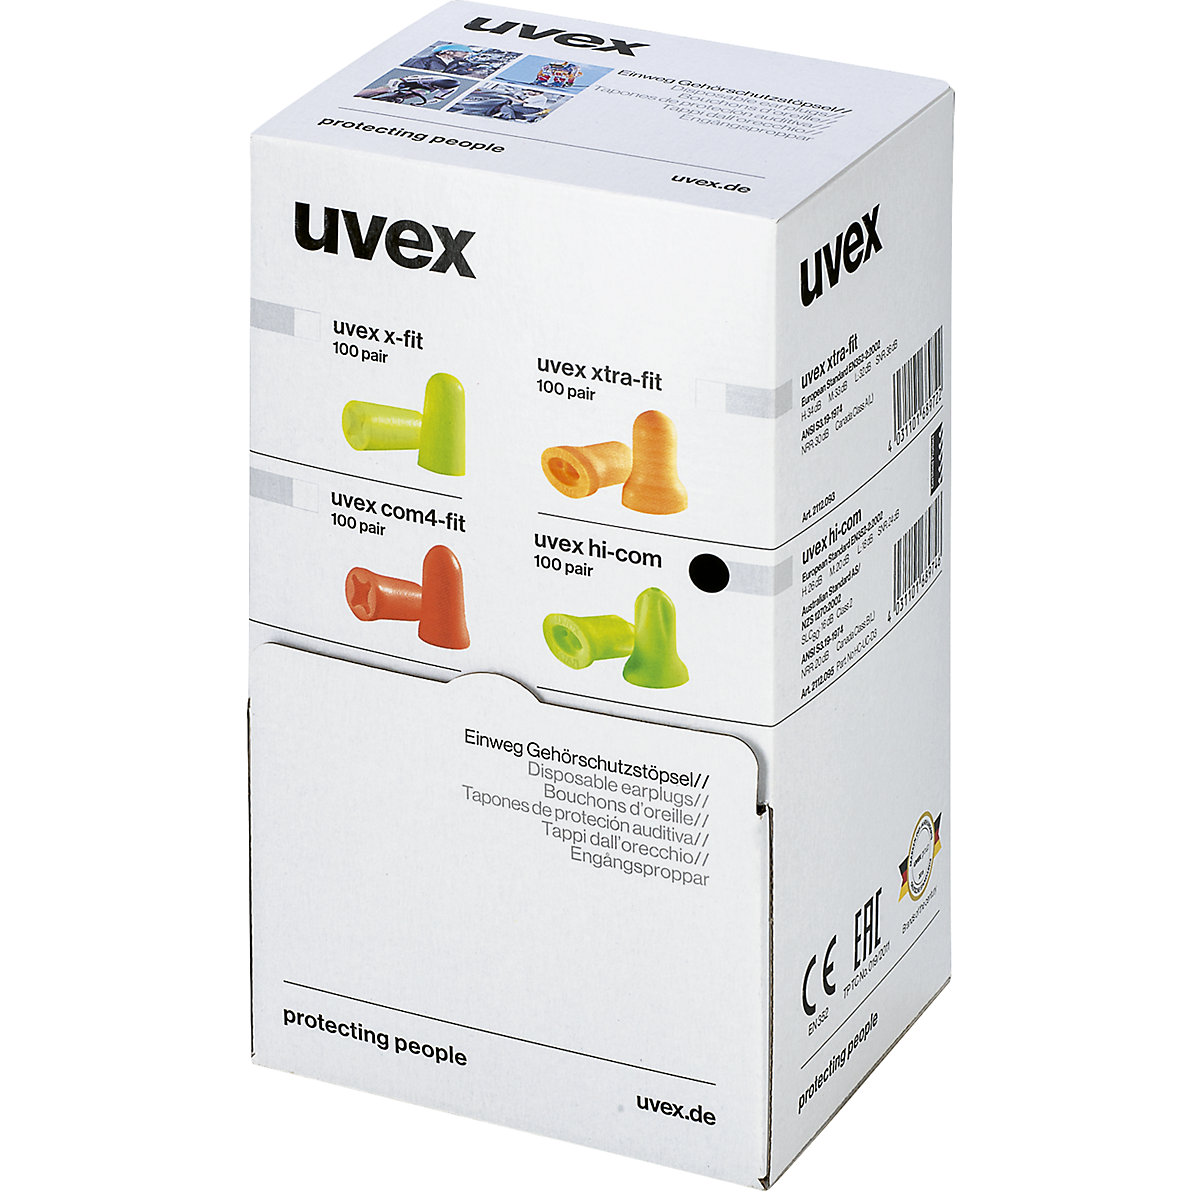 hi-com ear plugs – Uvex